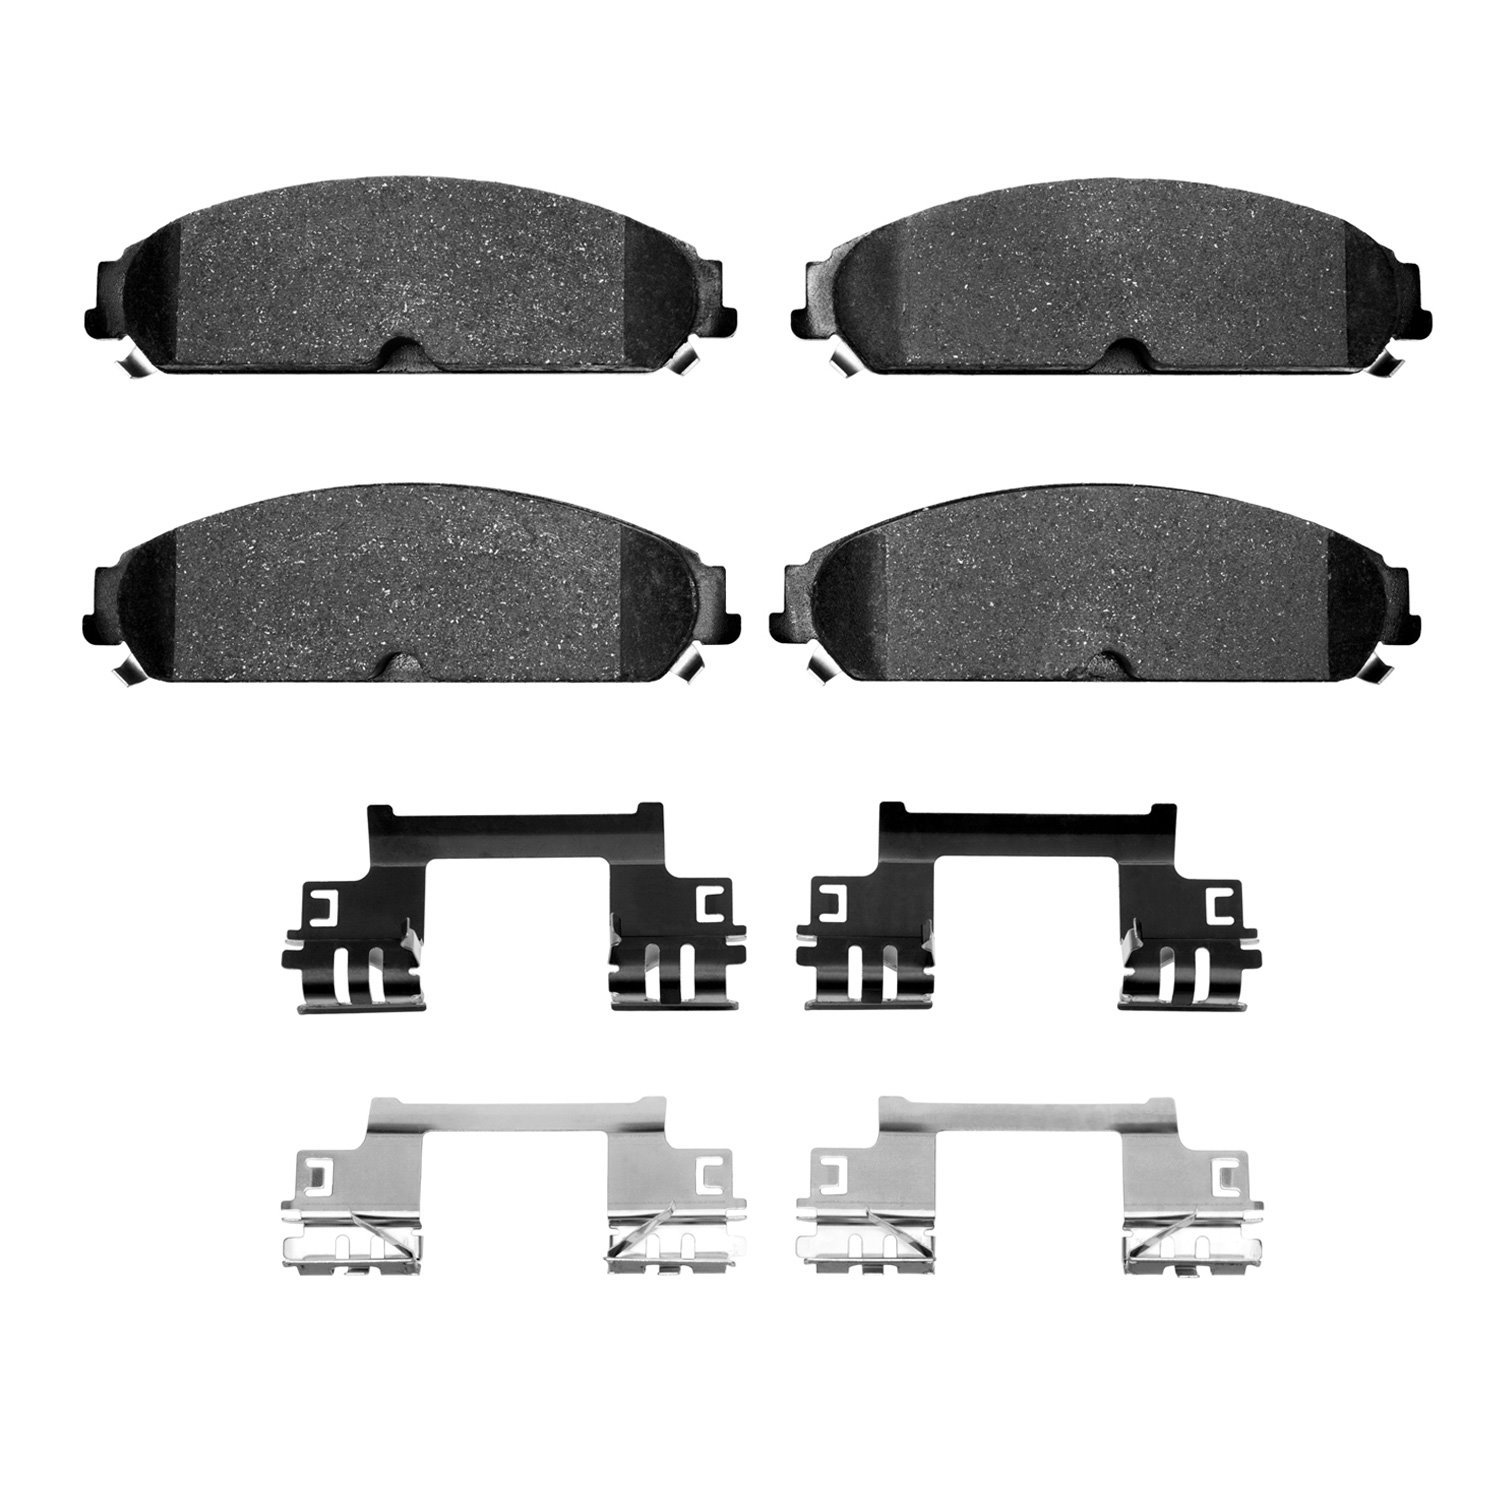 1310-1058-02 3000-Series Ceramic Brake Pads & Hardware Kit, Fits Select Mopar, Position: Front